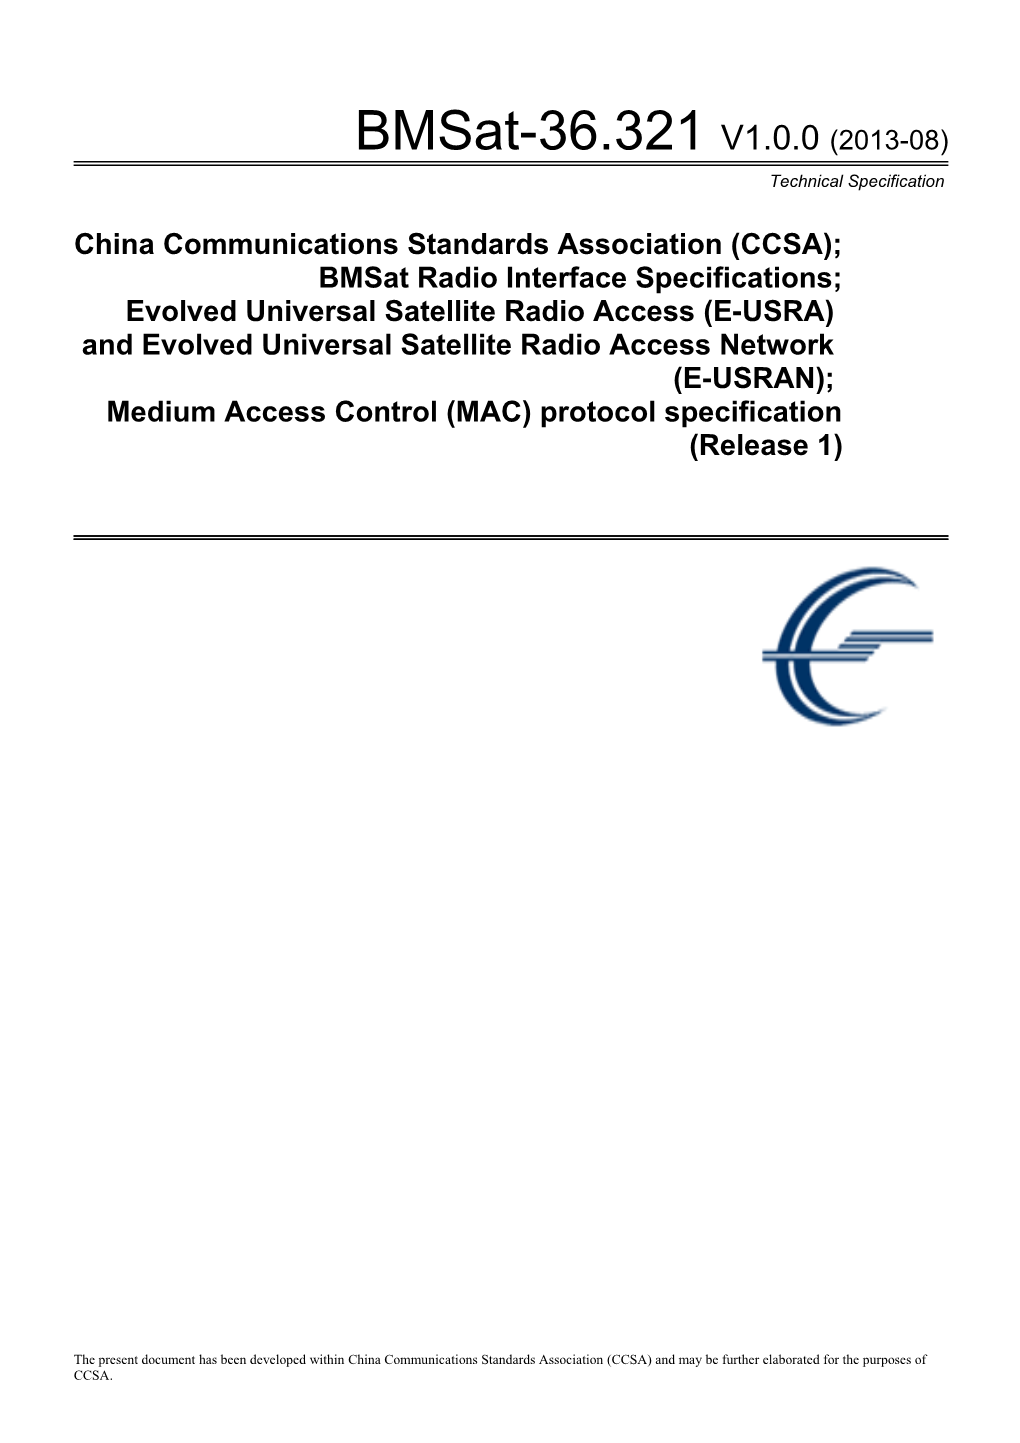 China Communications Standards Association (CCSA);